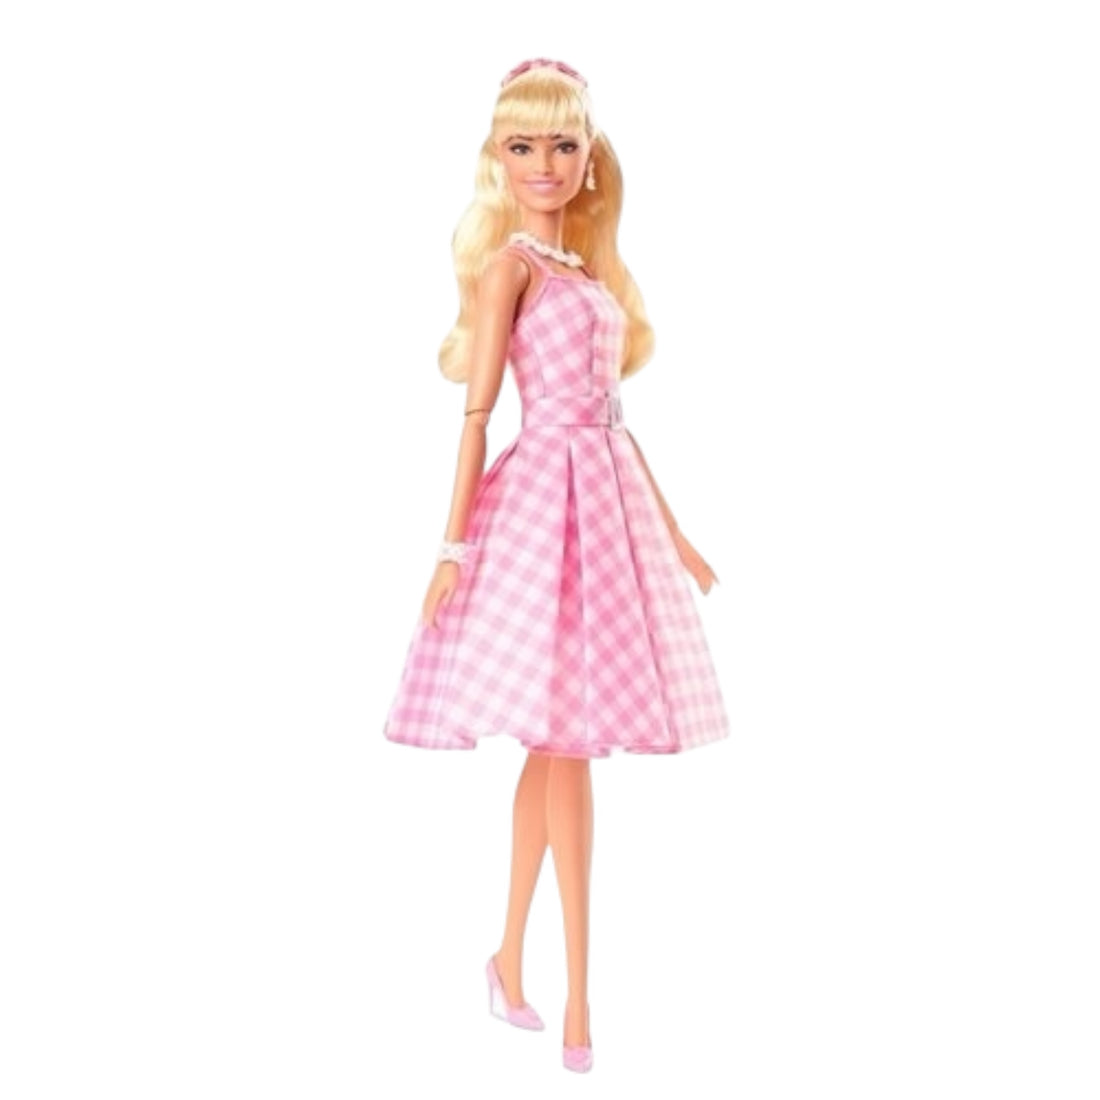 Barbie Movie Doll in Pink Gingham Dress